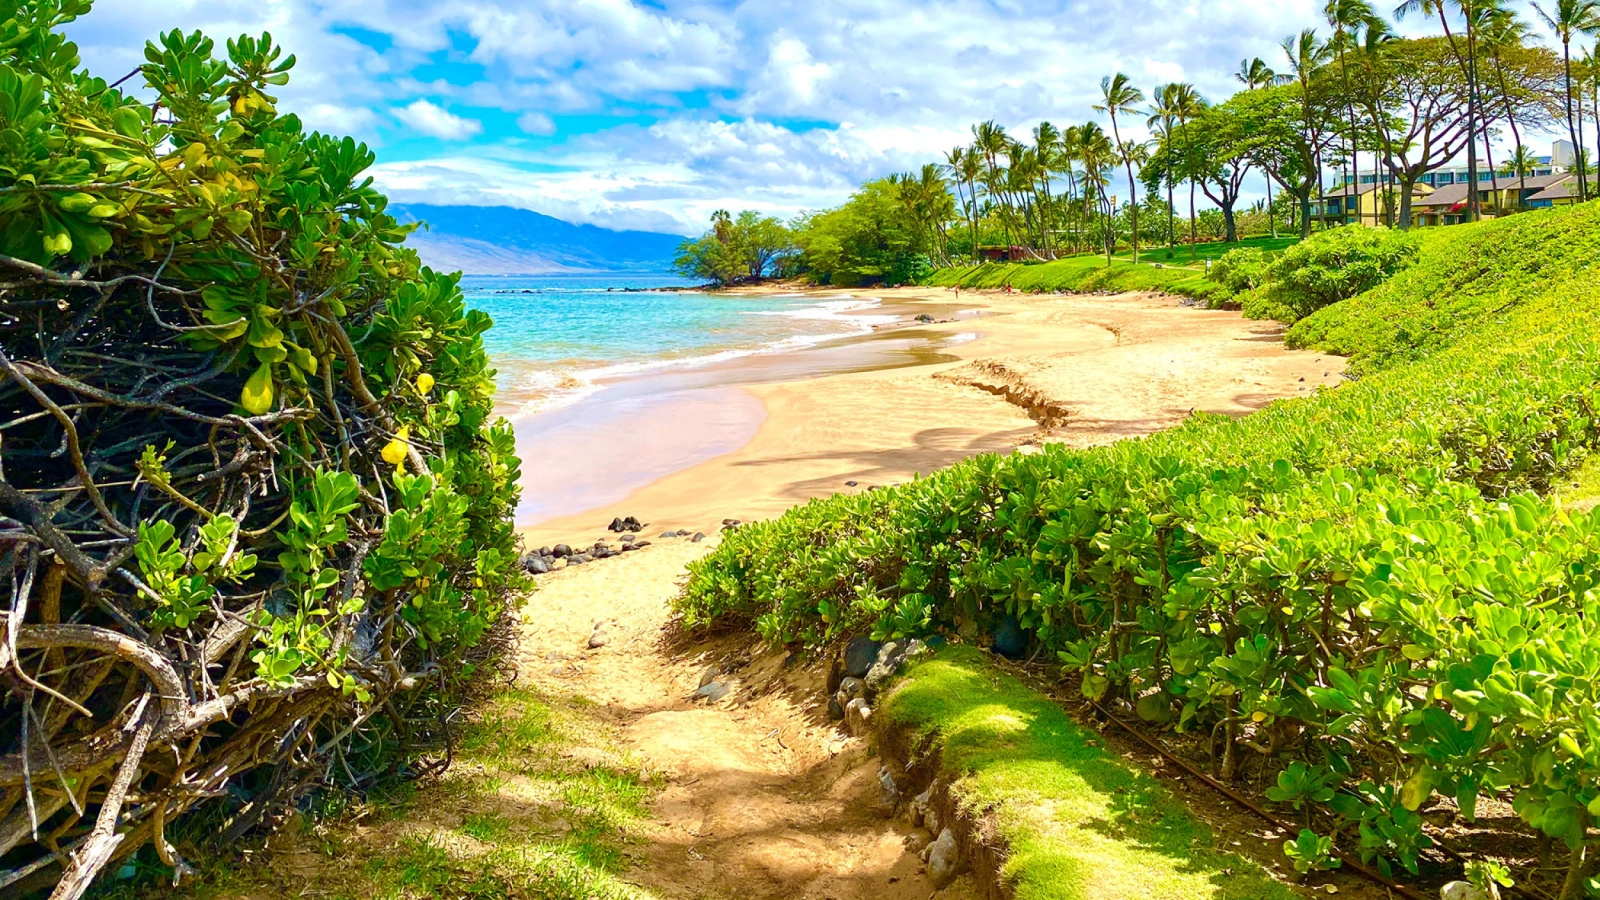  Wailea  strand - Hawaii Islands